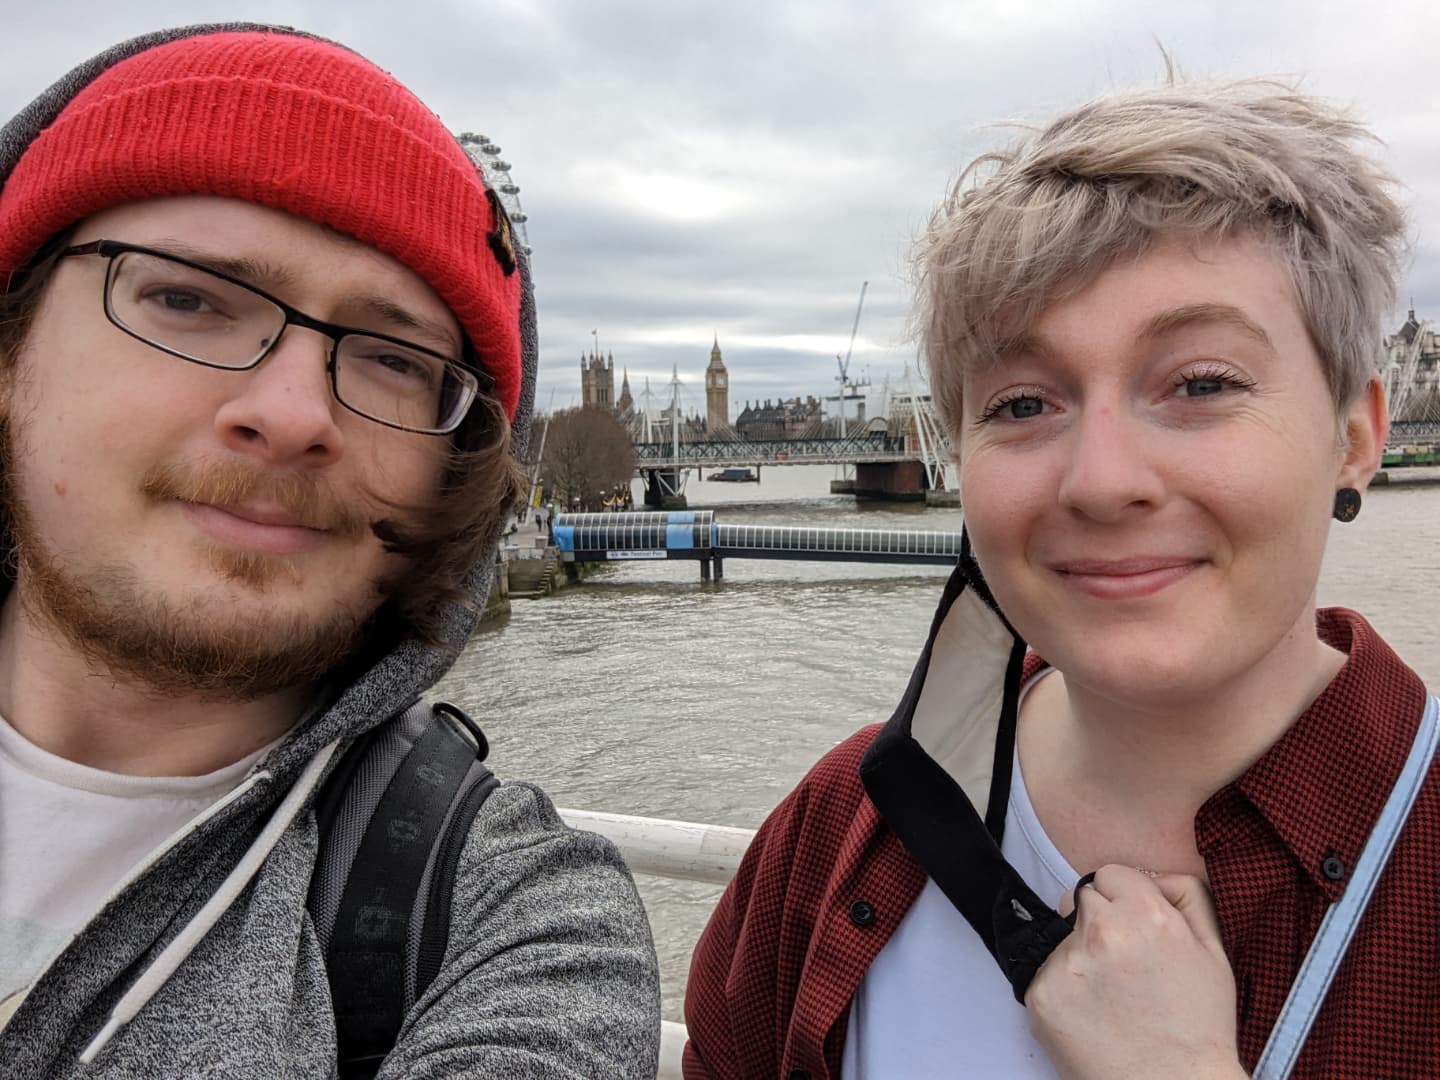 Selfie with my wife on the Waterloo bridge, Big Ben in the background